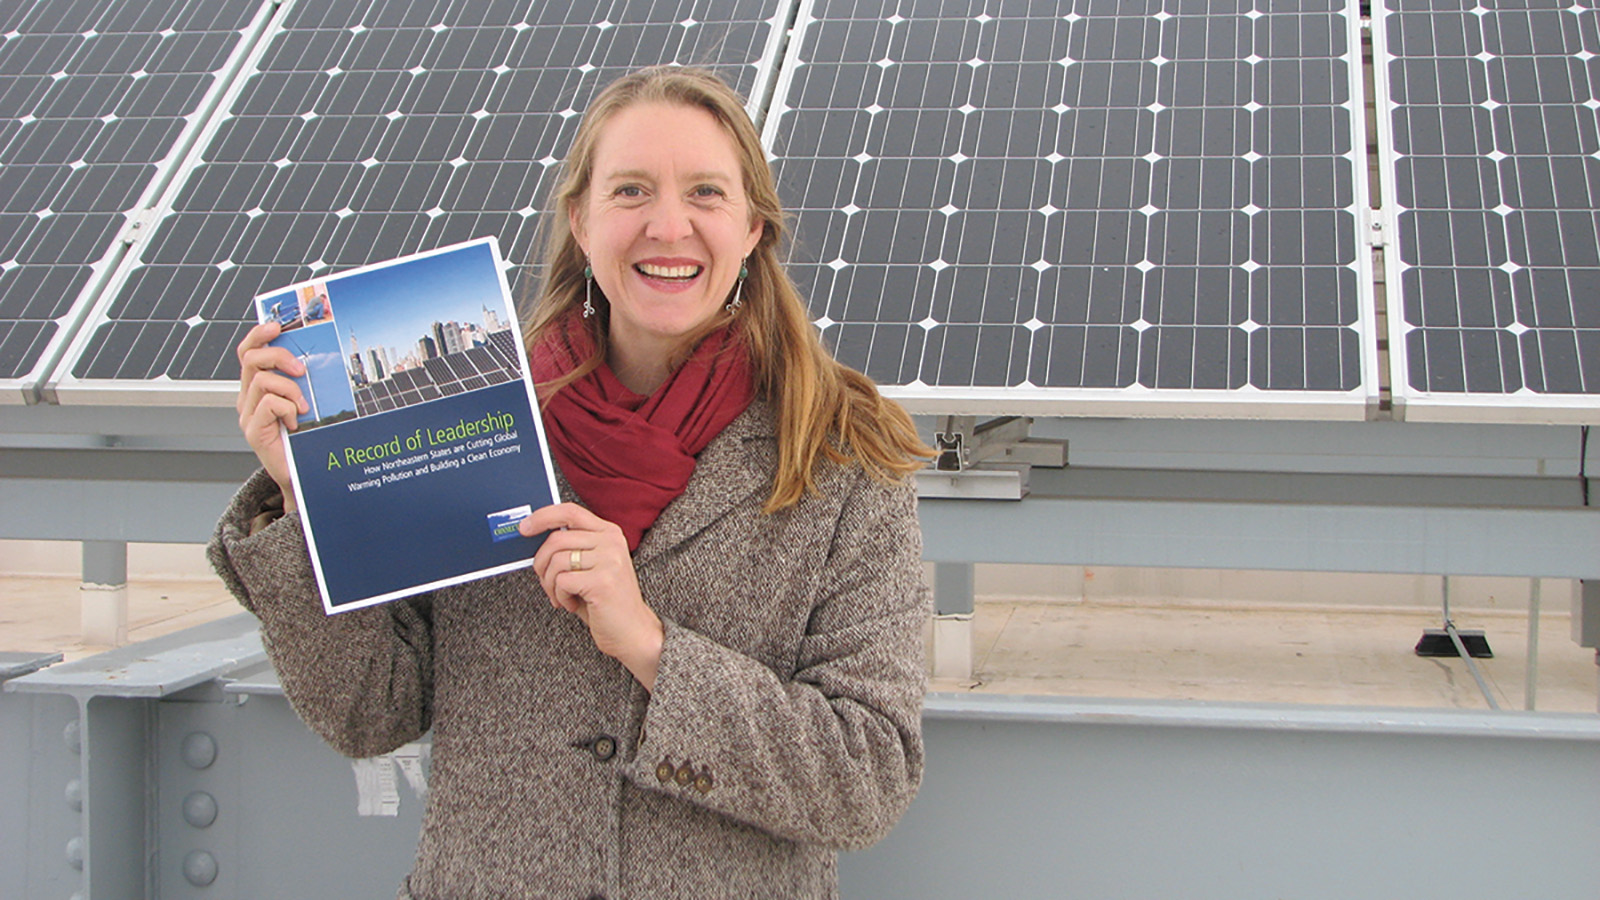 Johanna Neumann in front of solar panels